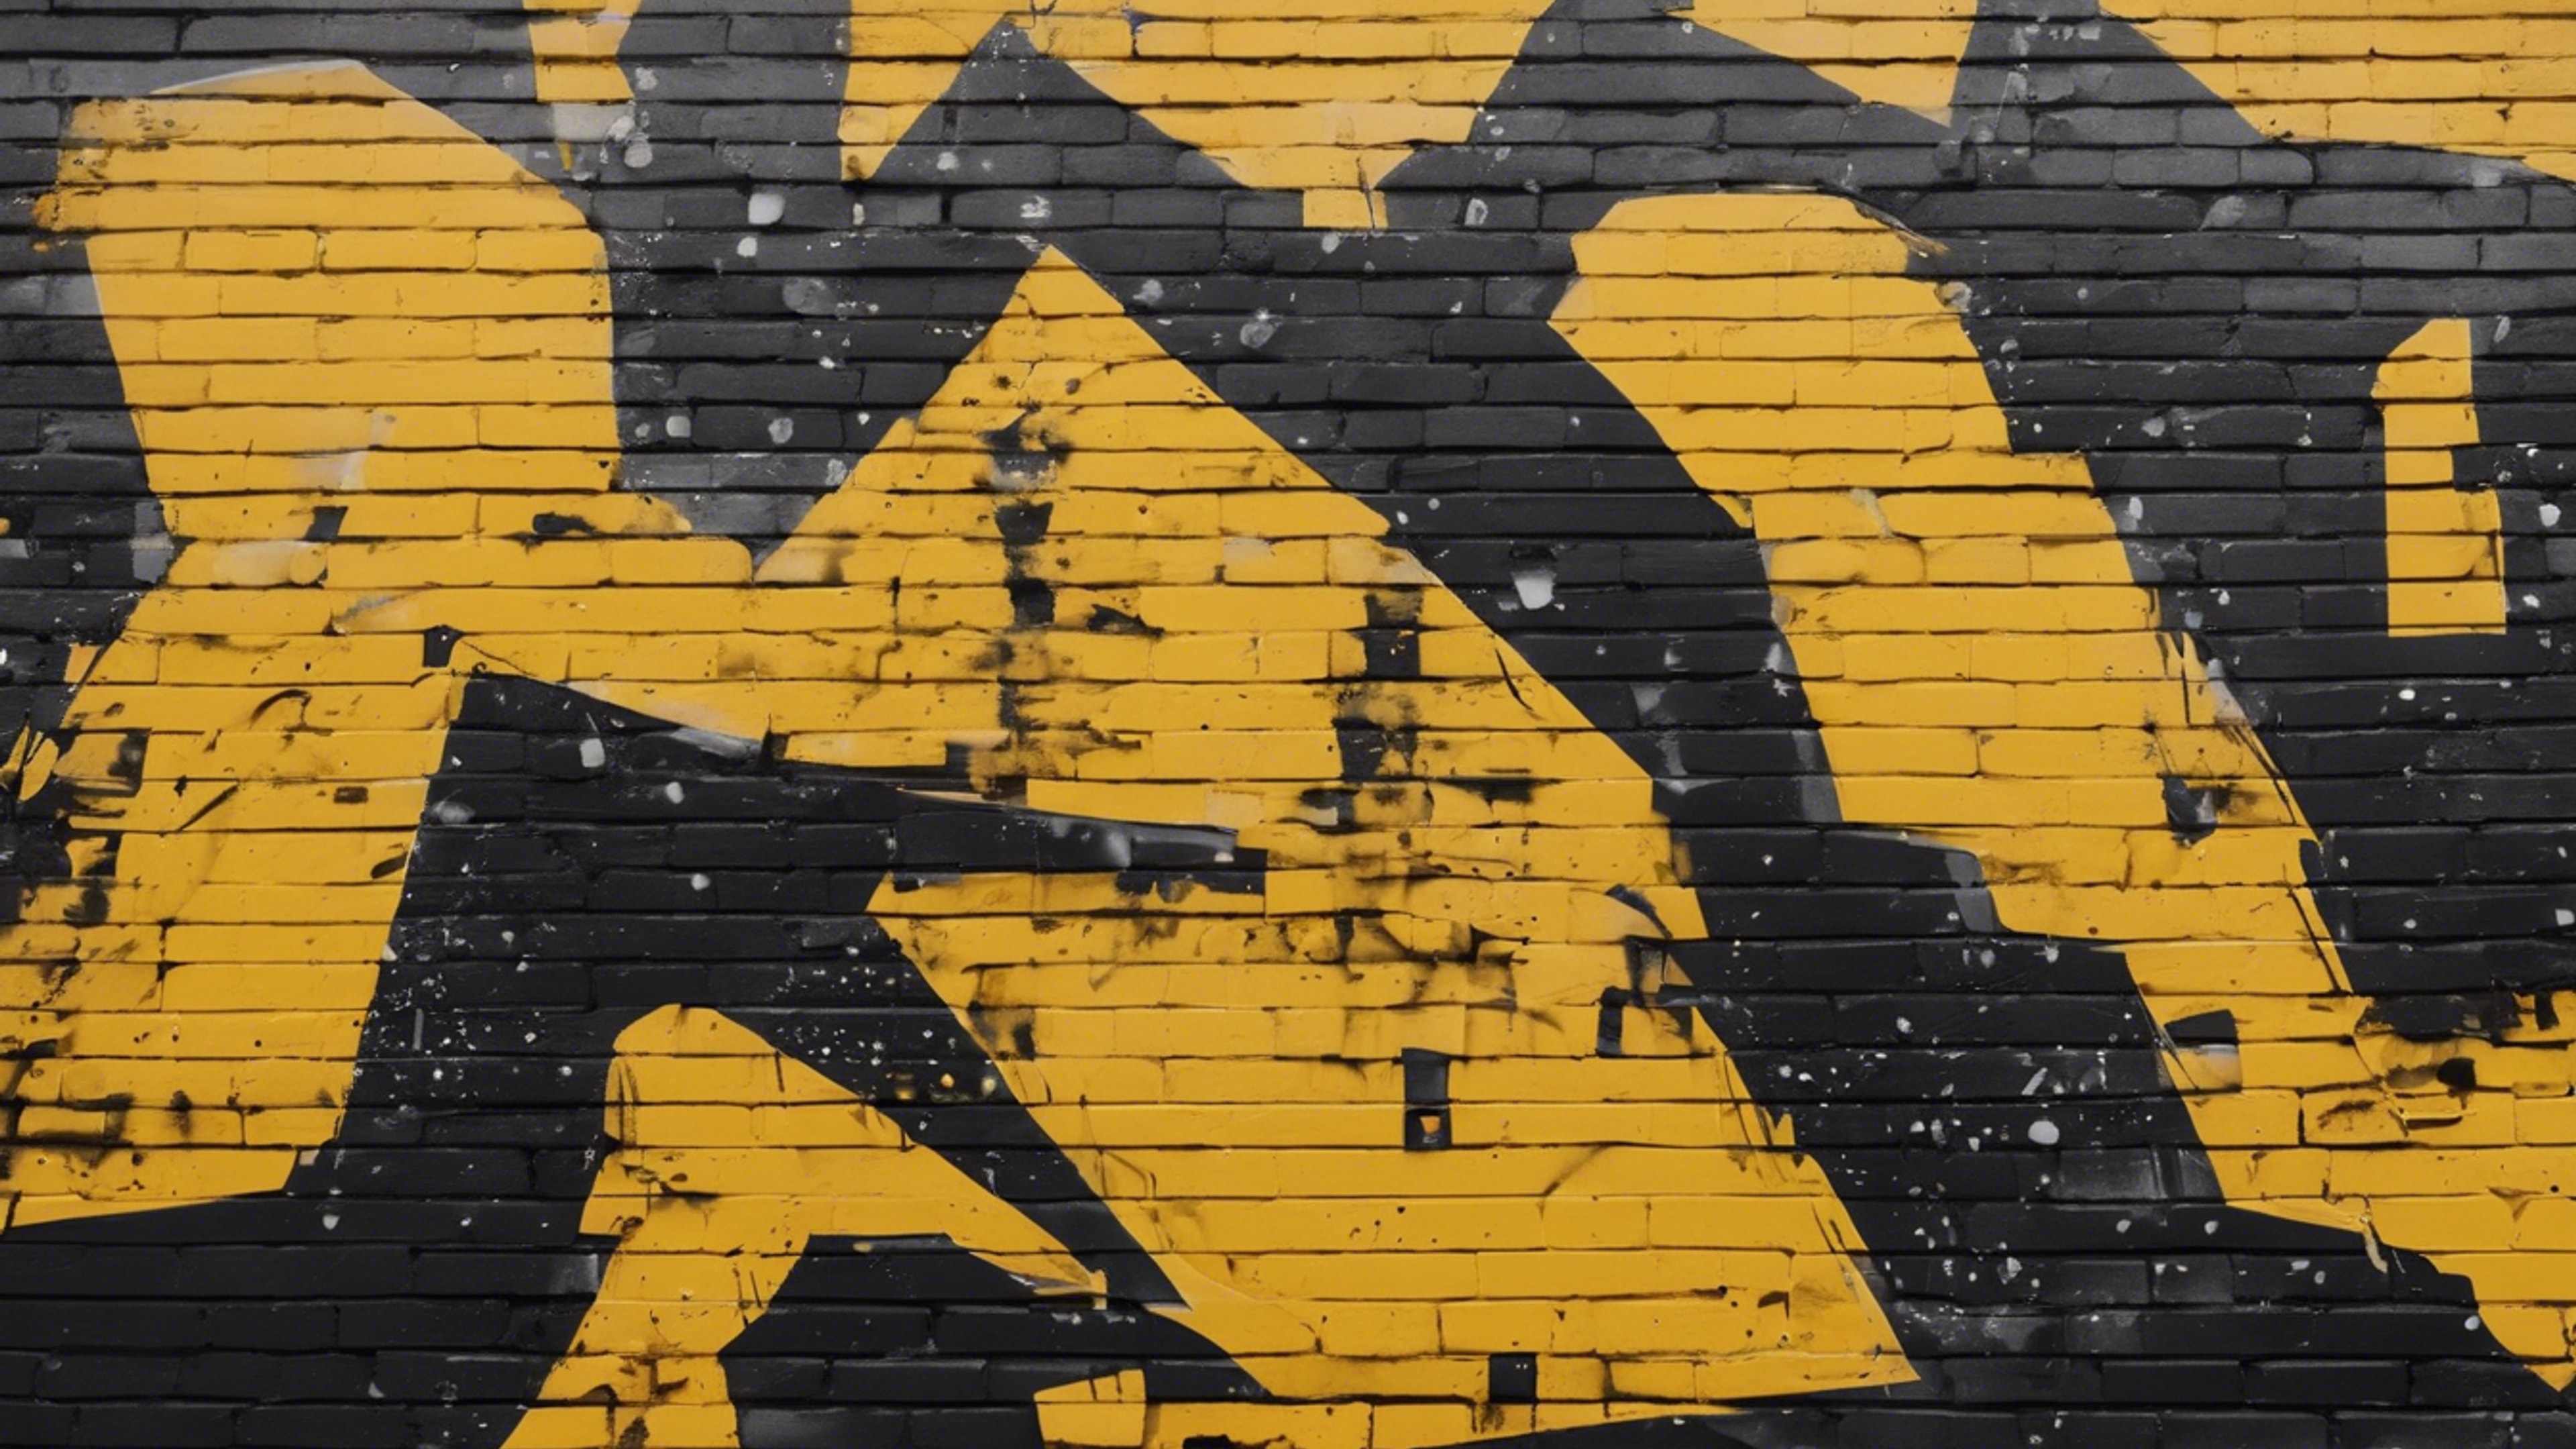 Bold street art on a brick wall splashing with black and yellow abstract designs.壁紙[d481eccf94e1427b9bbb]